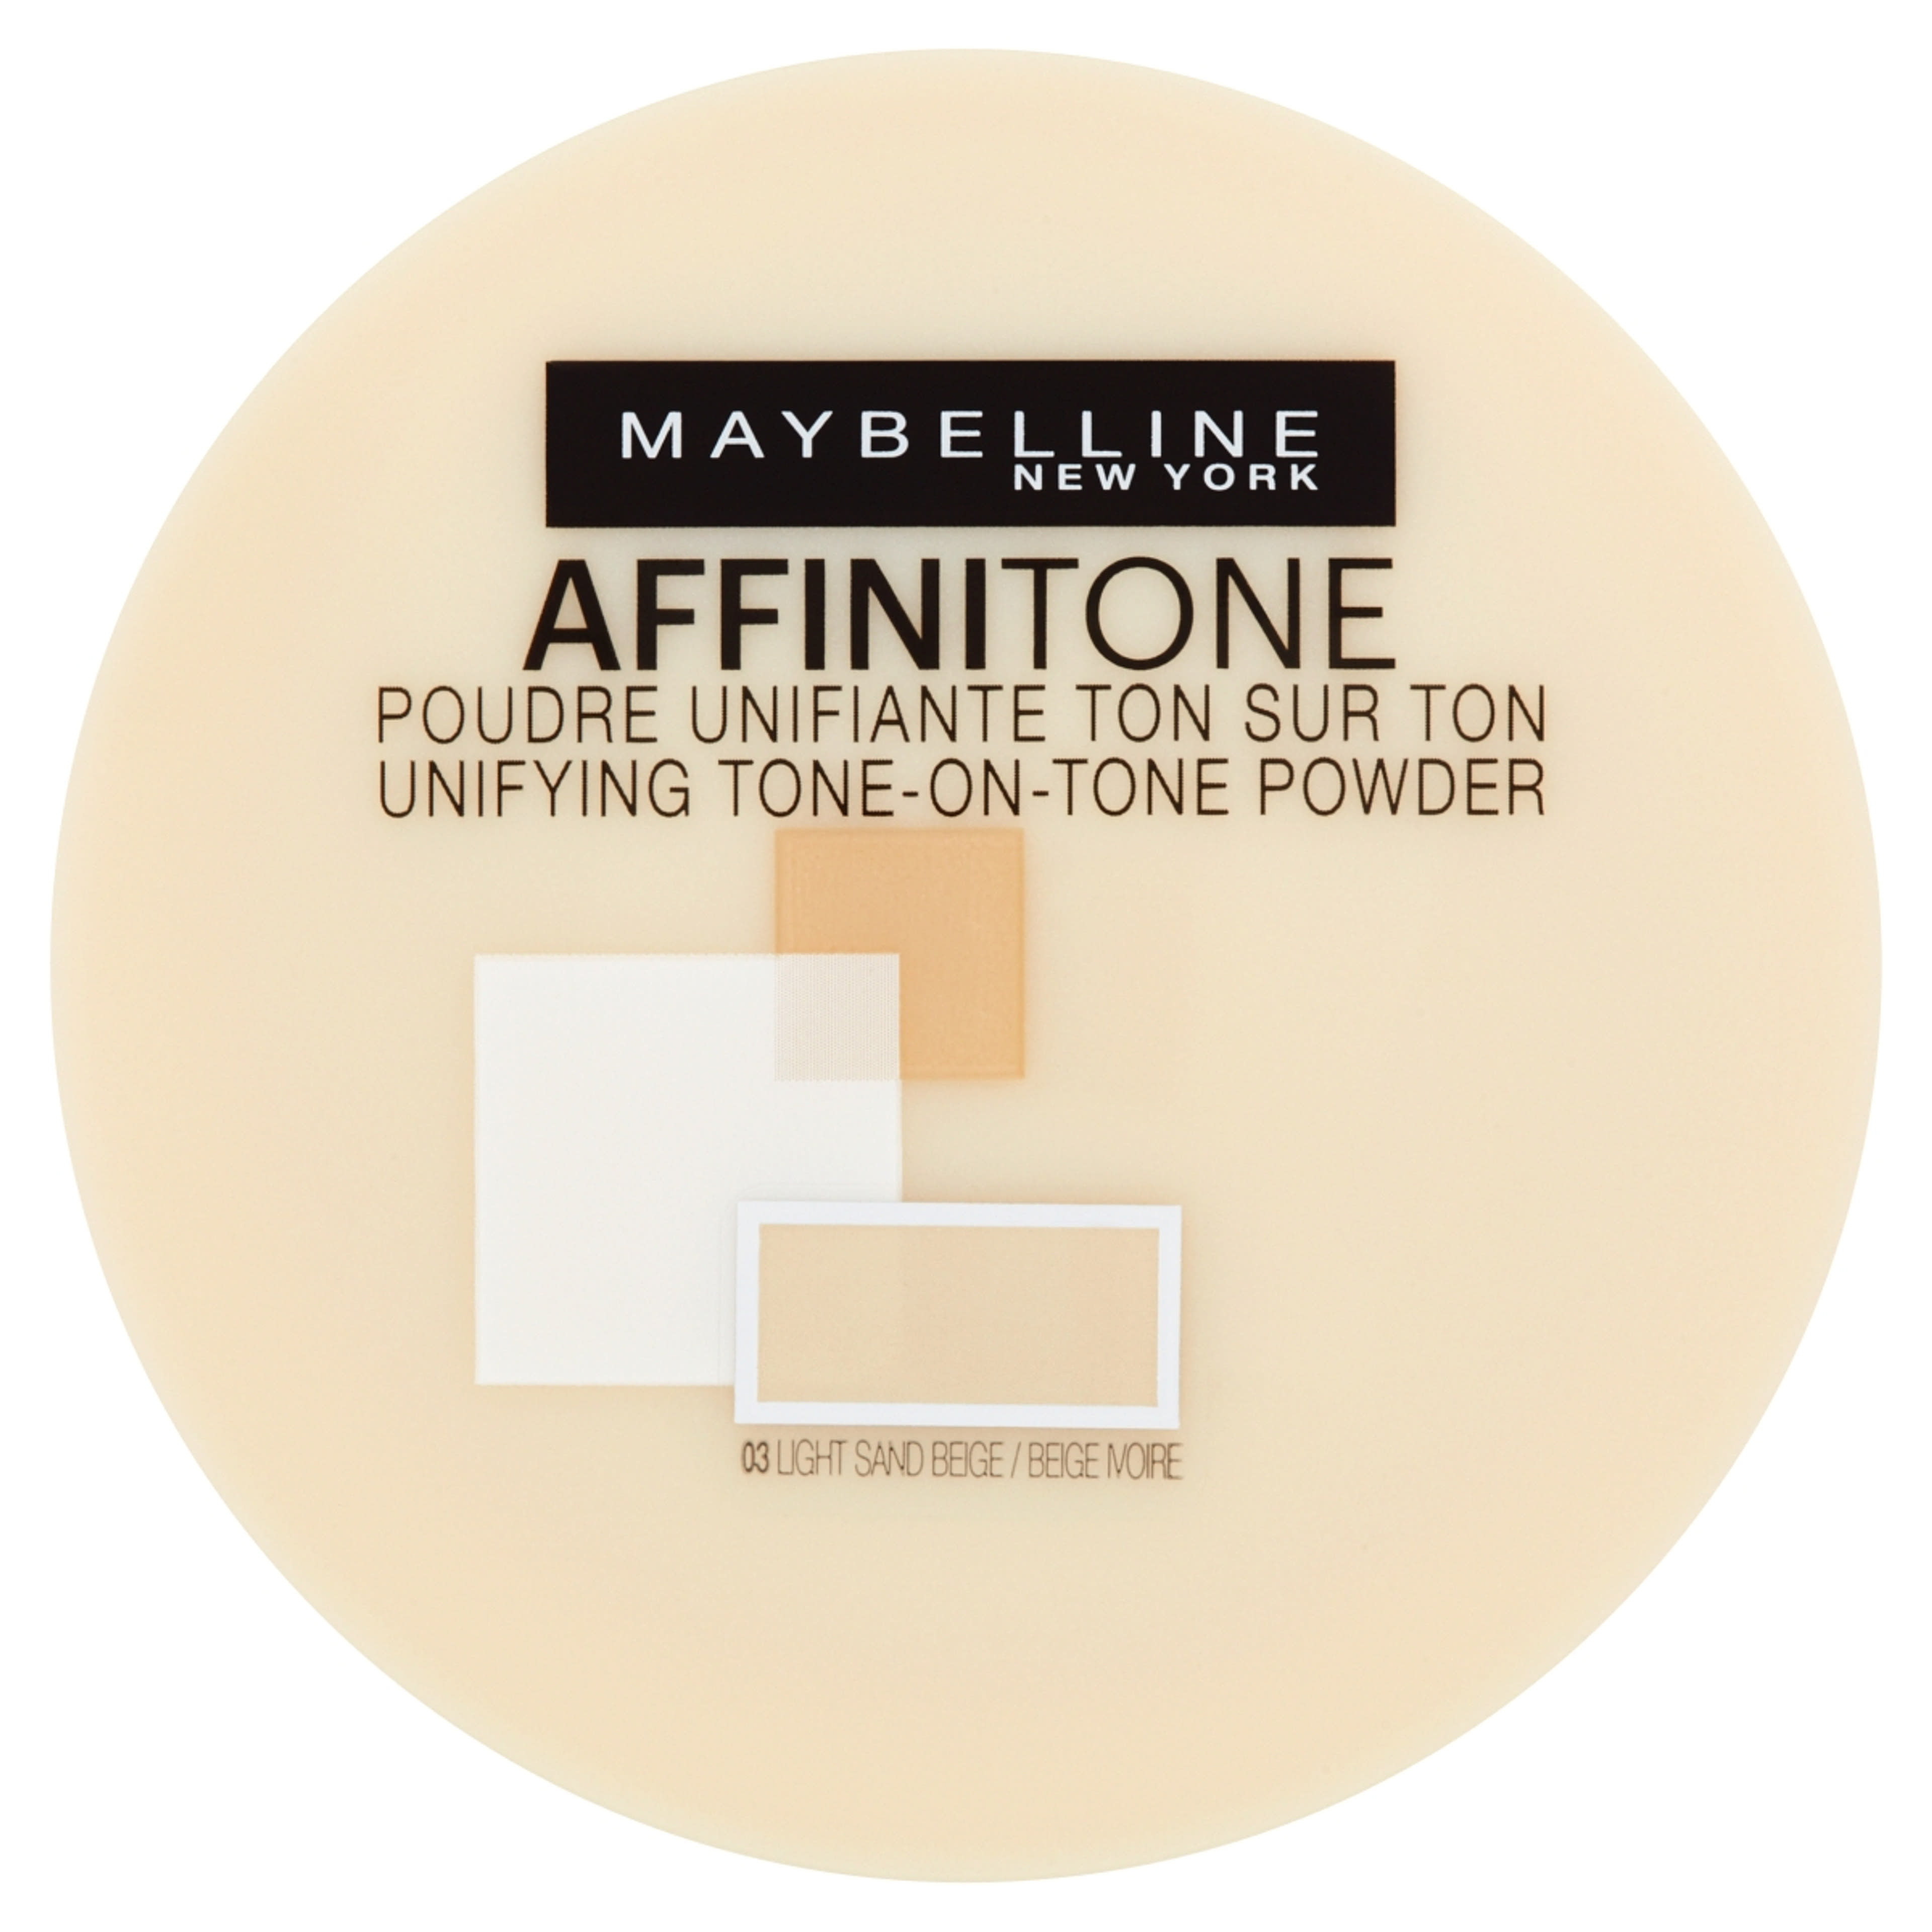 Maybelline Affinitone púder, 03 Light Sand Beige - 1 db-1